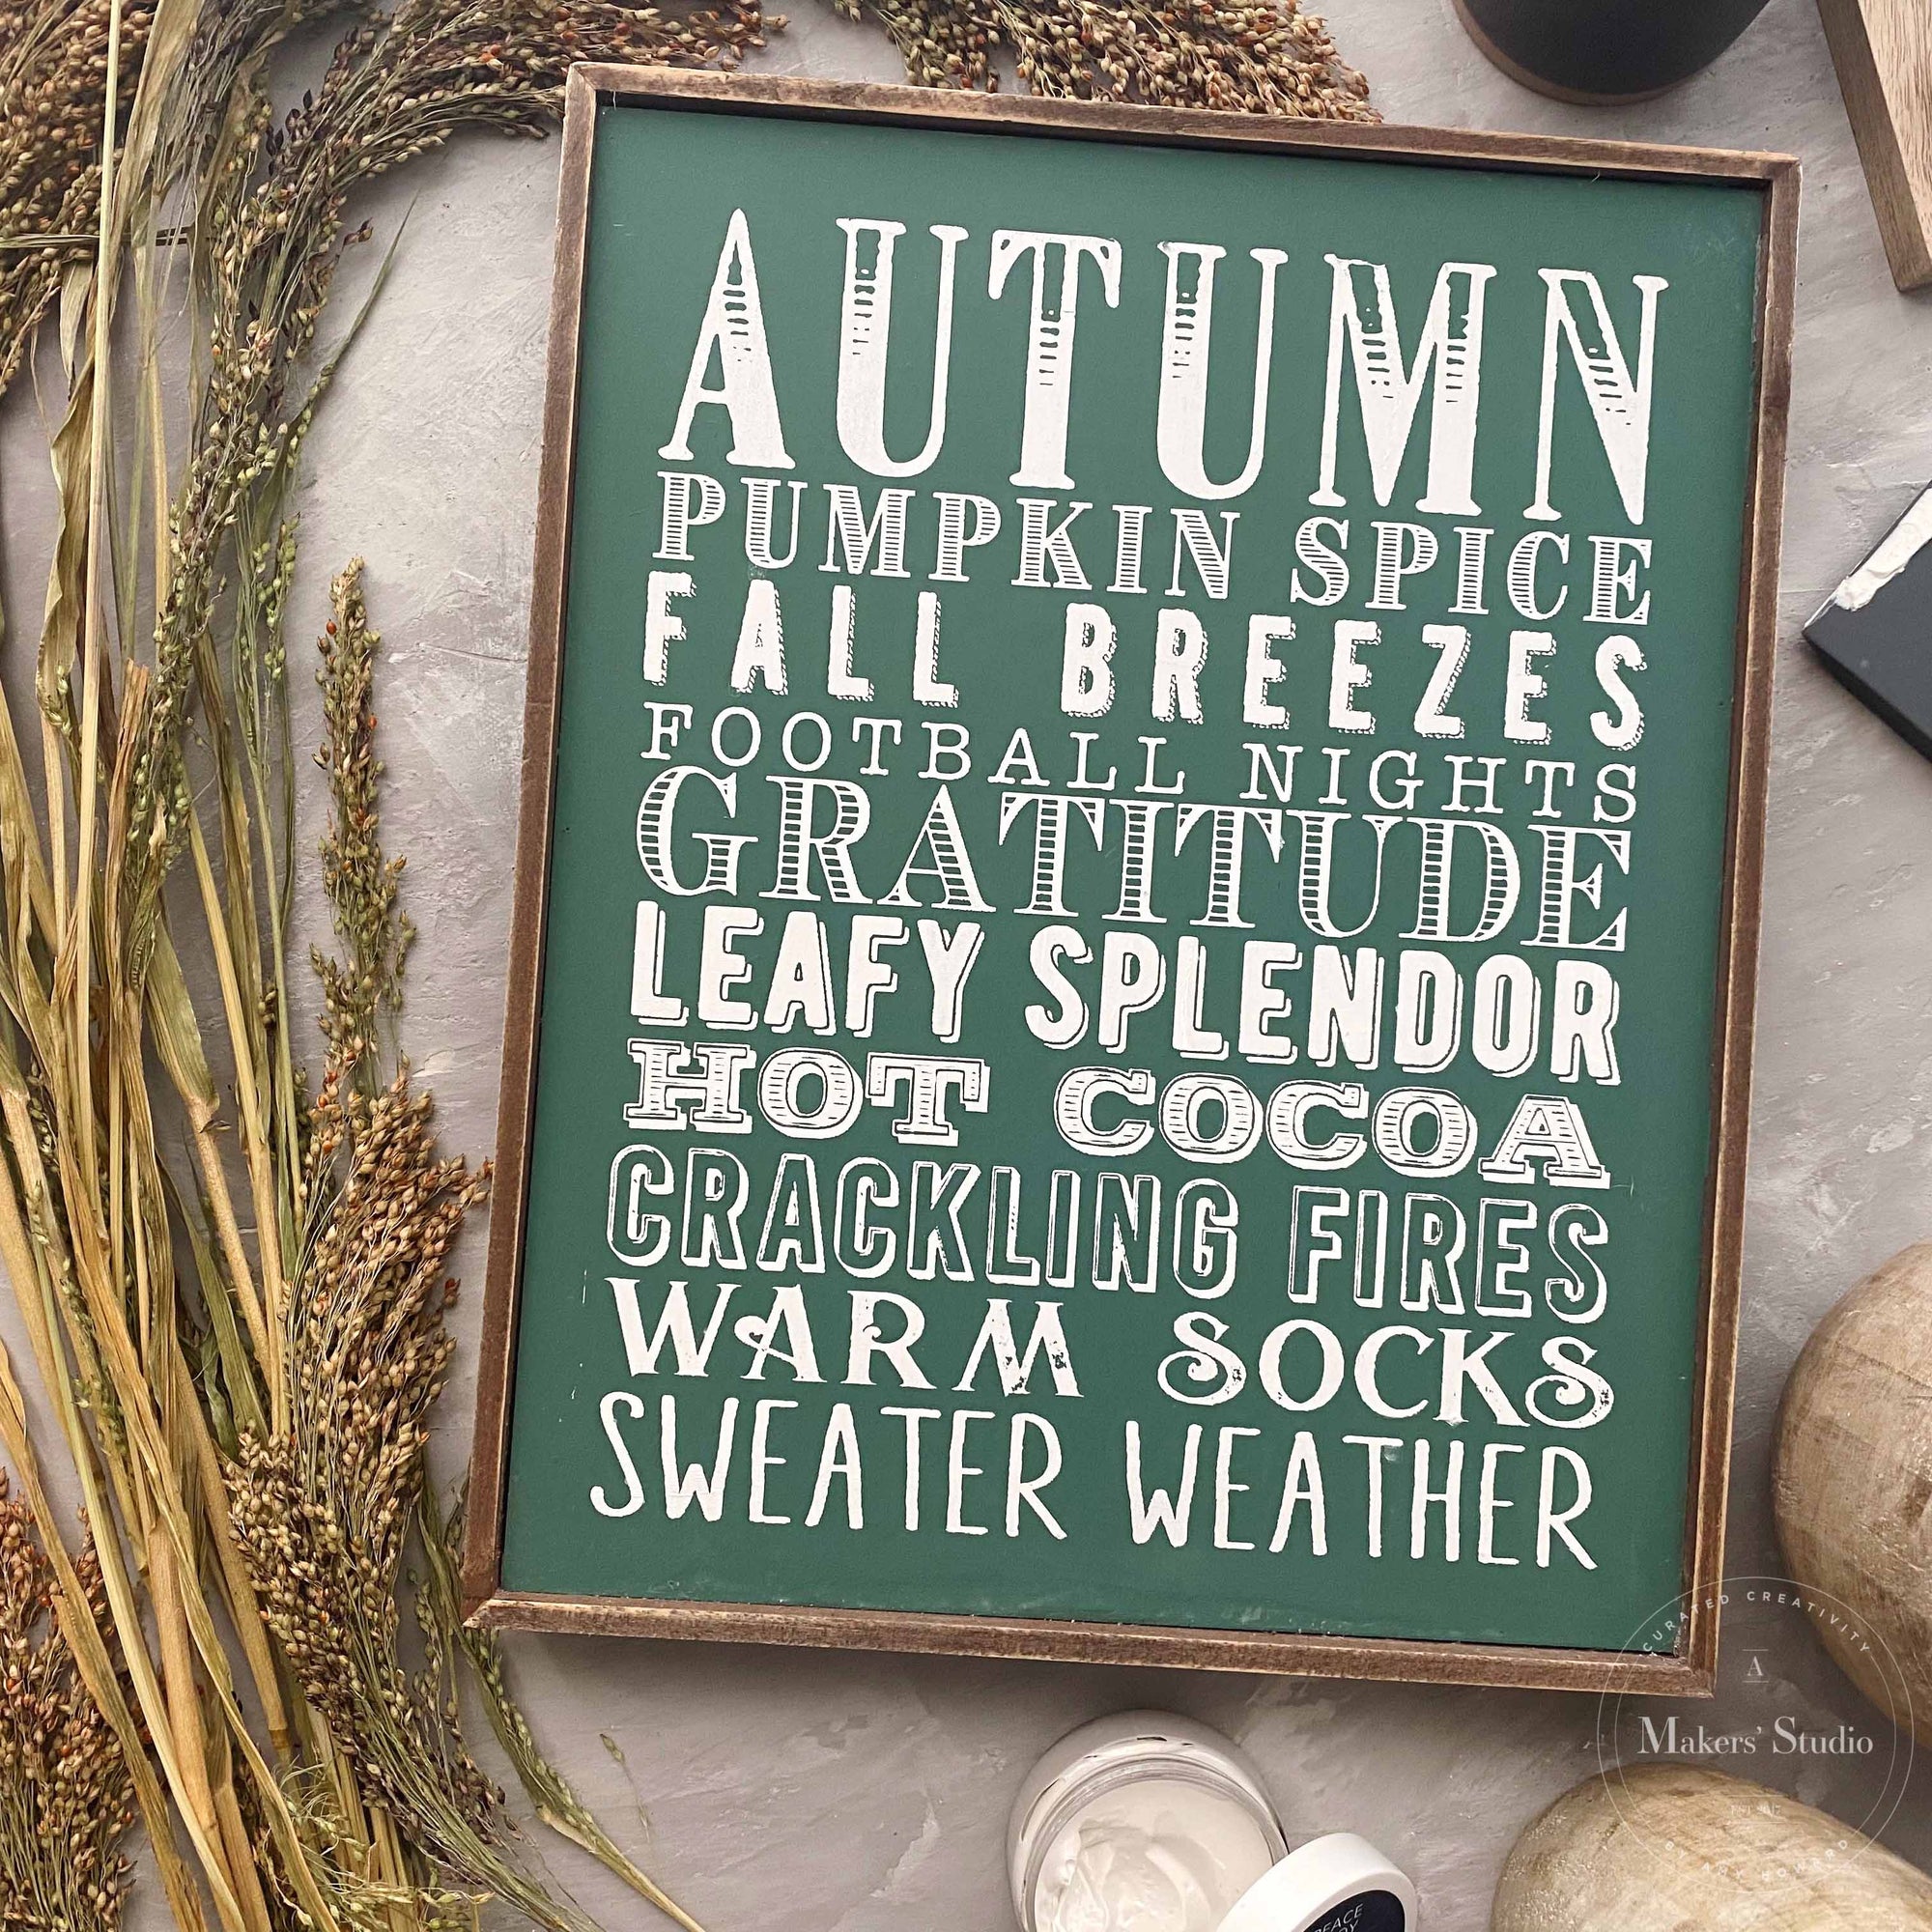 Fall is My Favorite Season - Mesh Stencil 8.5x11